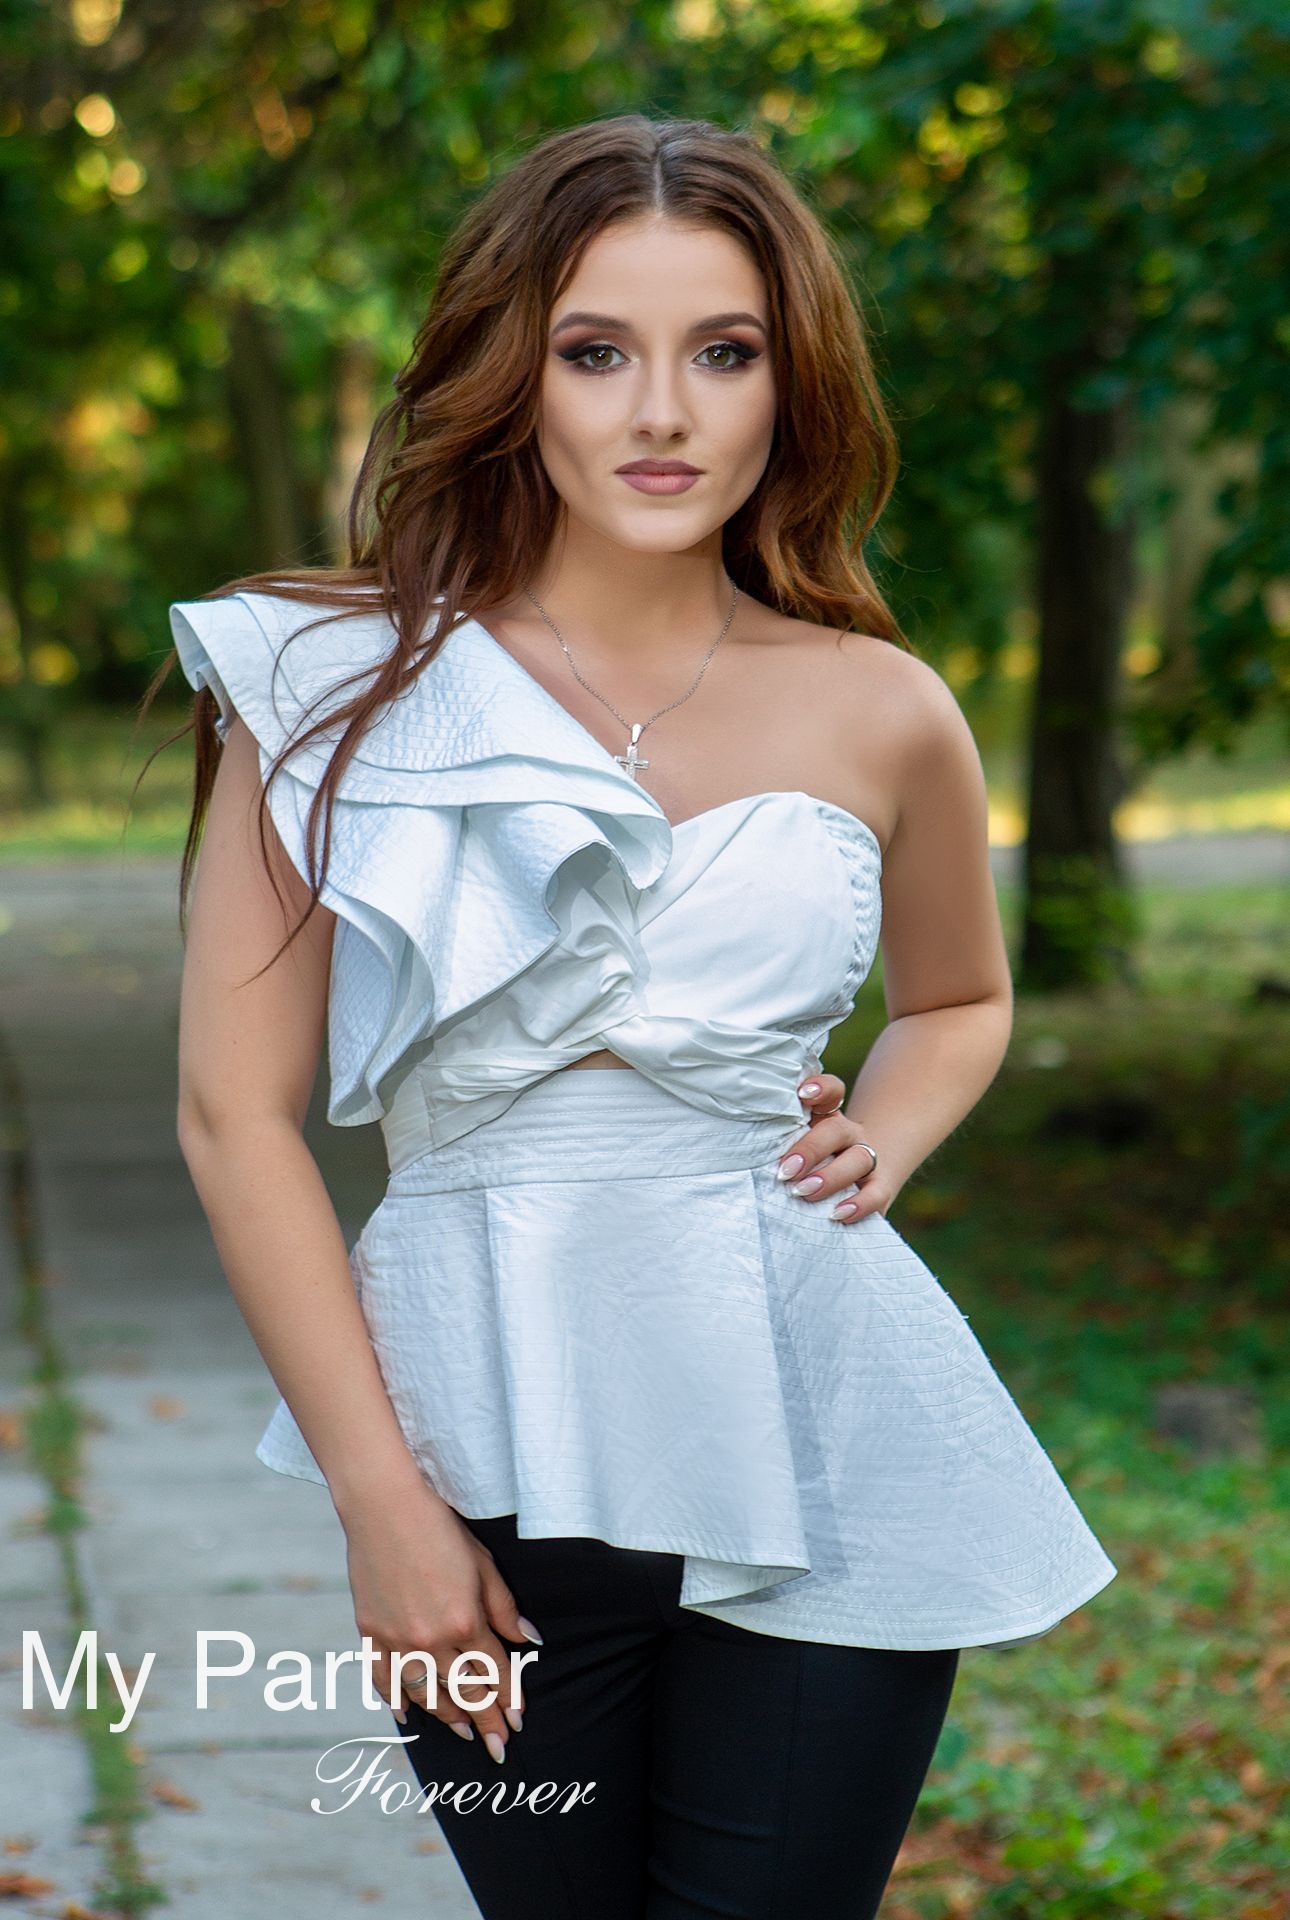 Dating Site to Meet Single Ukrainian Lady Marina from Odessa, Ukraine